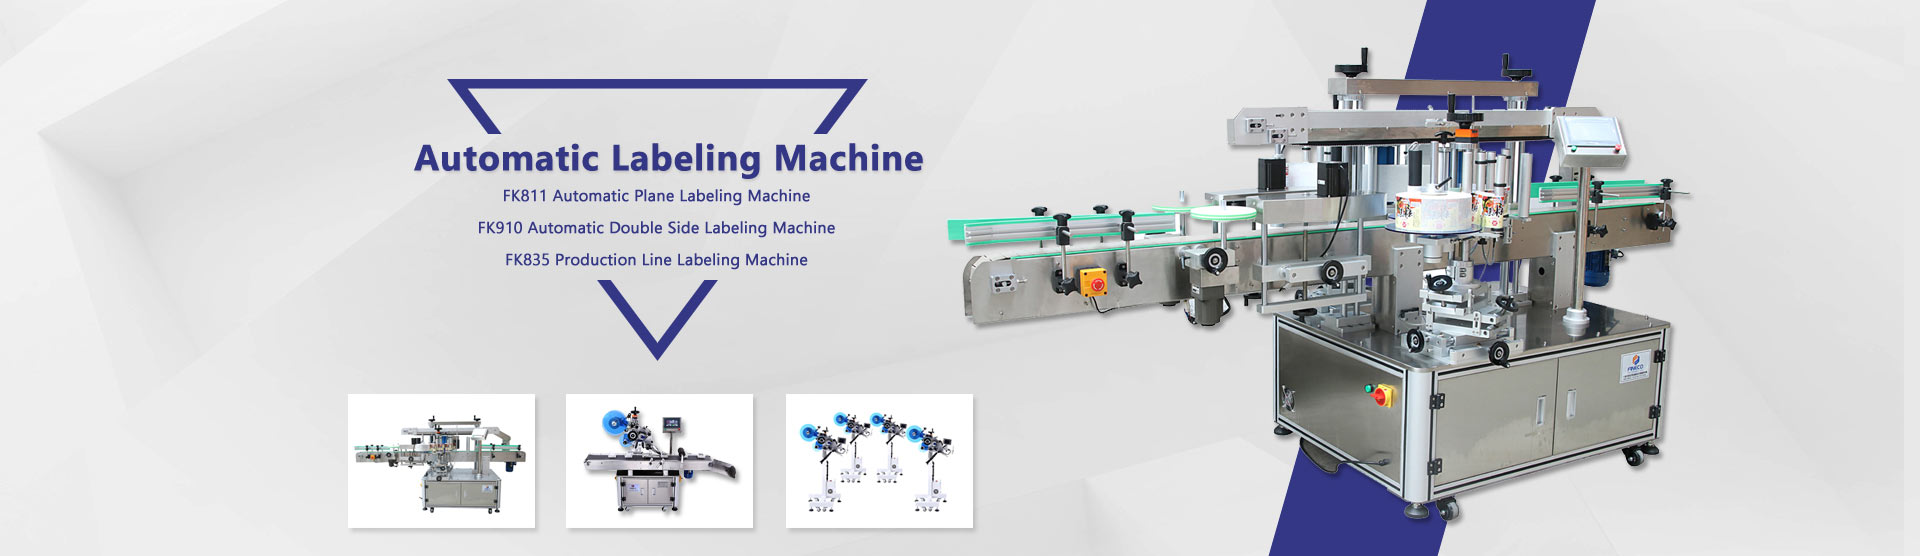 Automatic Labeling Machine